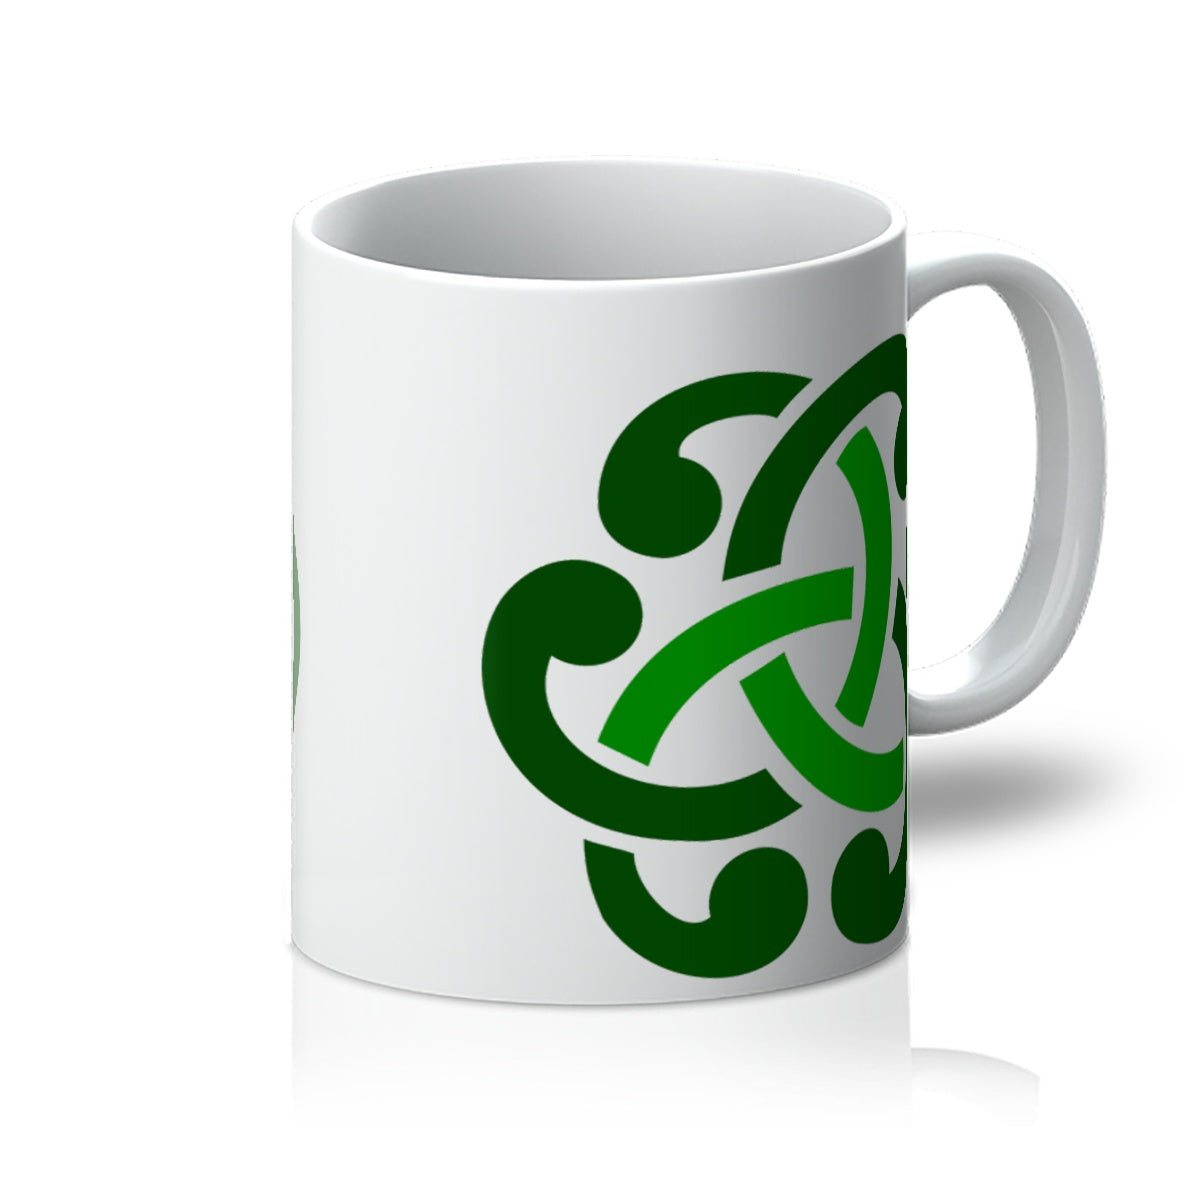 Green Celtic Knot Mug